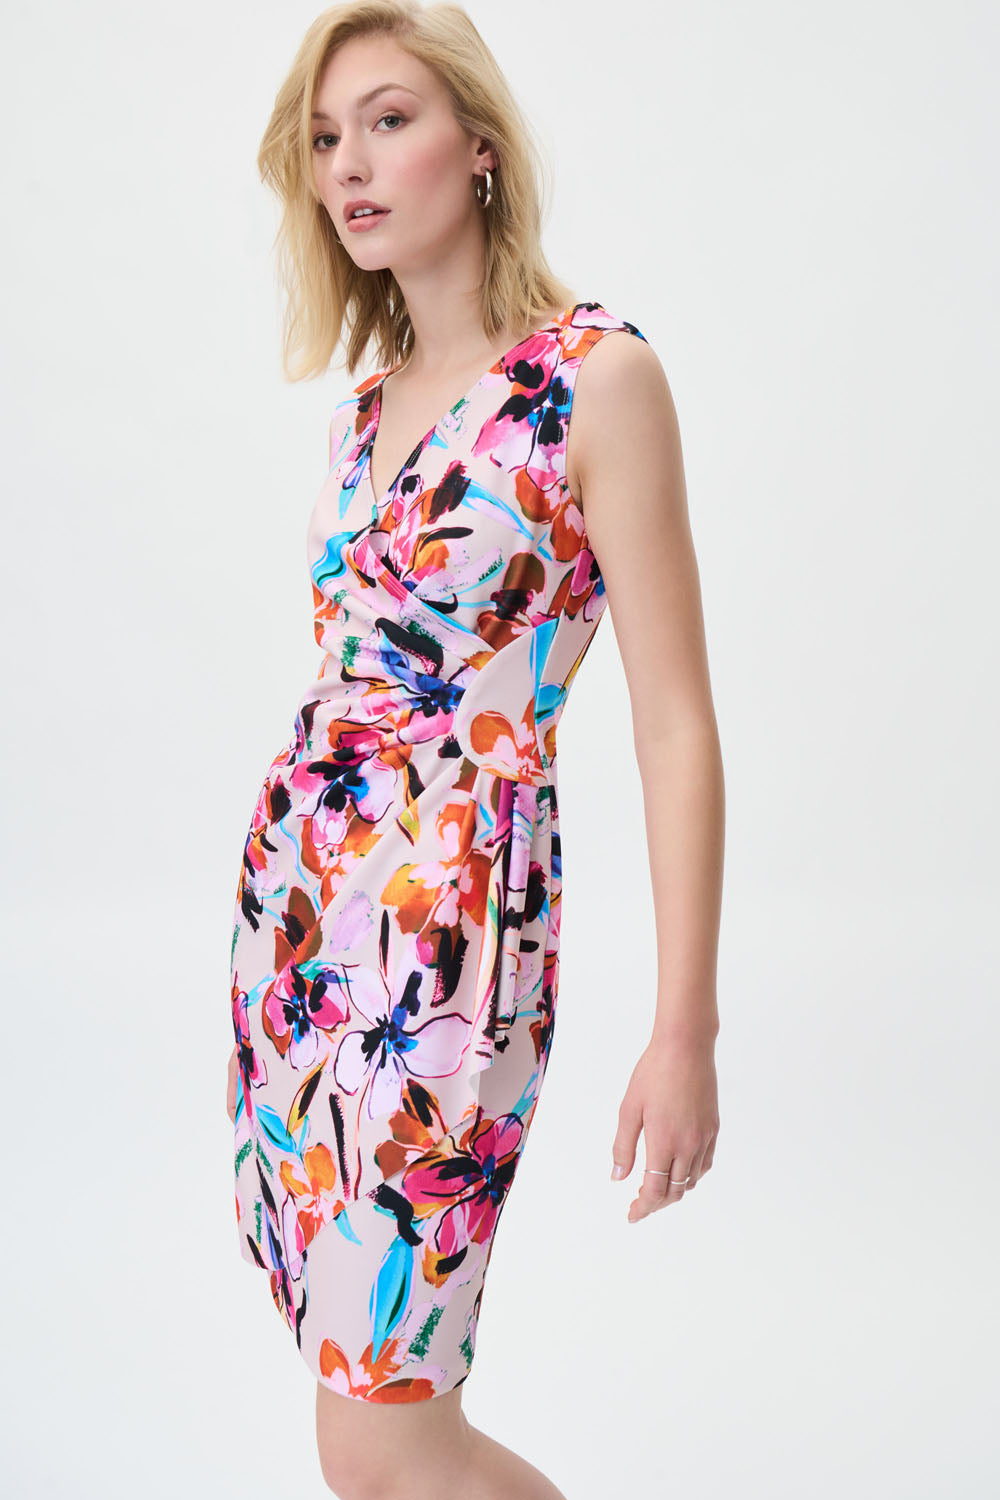 Joseph Ribkoff Beige-Multi Flower Print Wrap Dress Style 231172